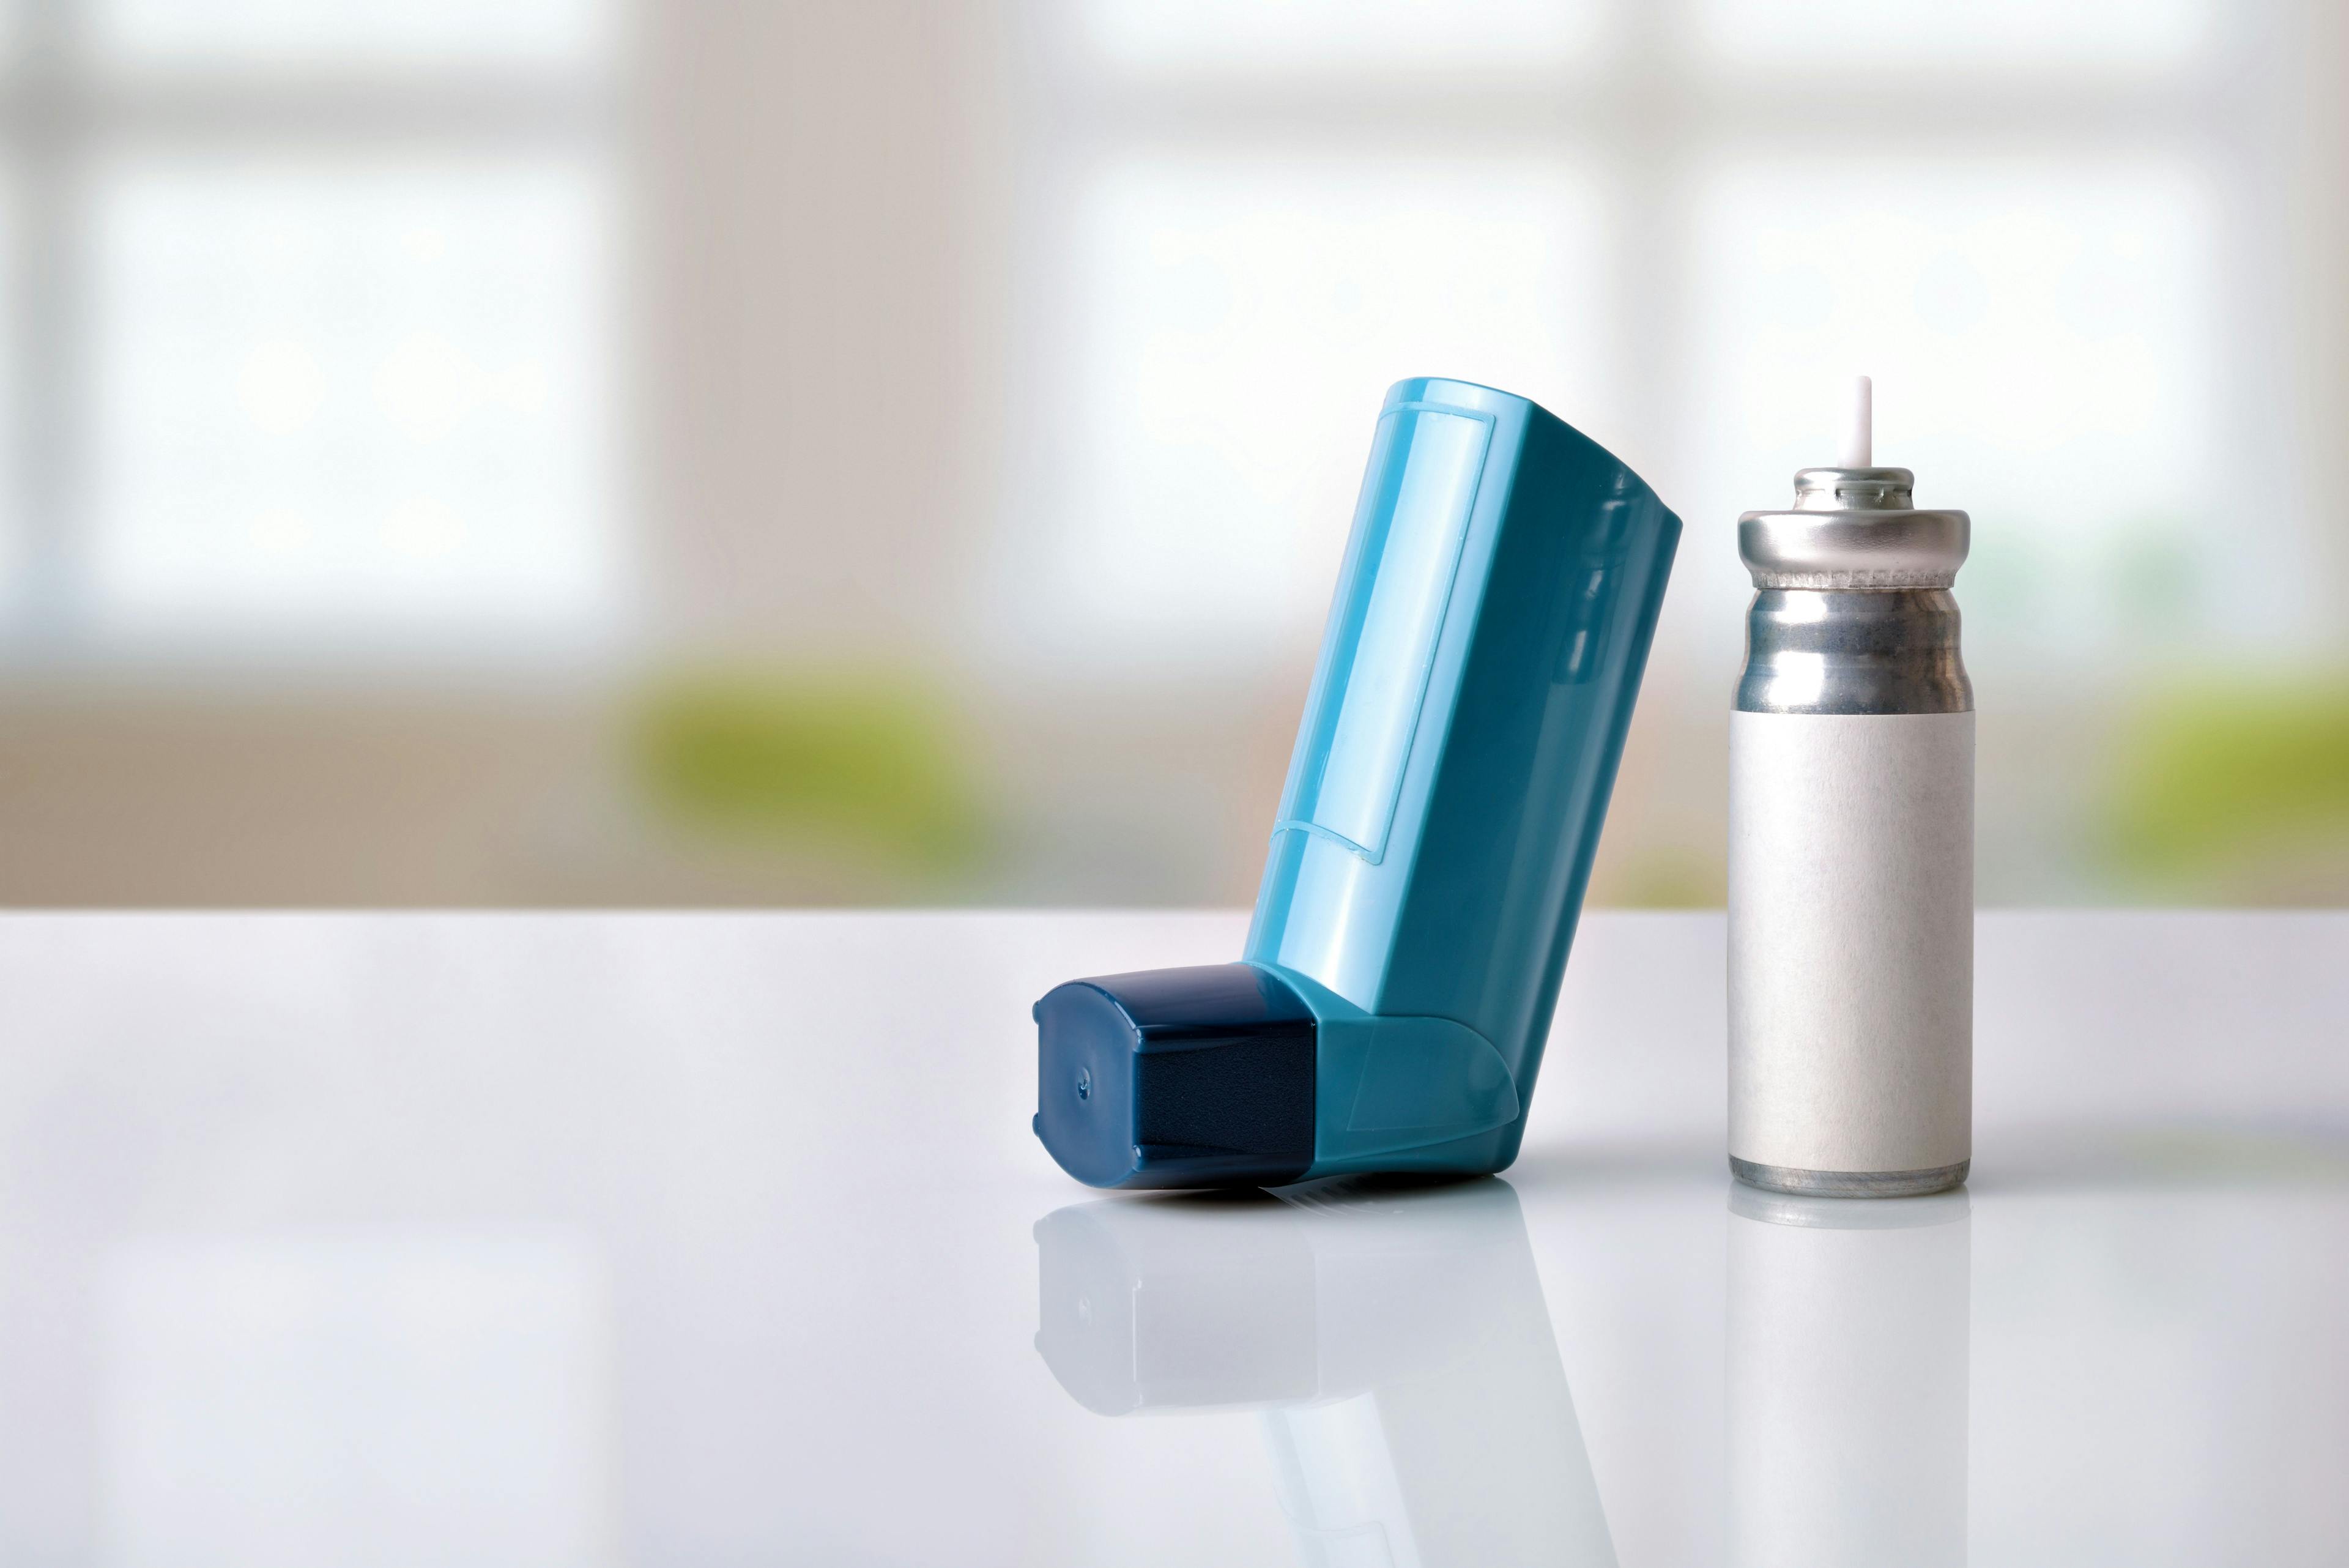 Asthma inhaler with cartridge -- Image credit: Davizro Photography | stock.adobe.com